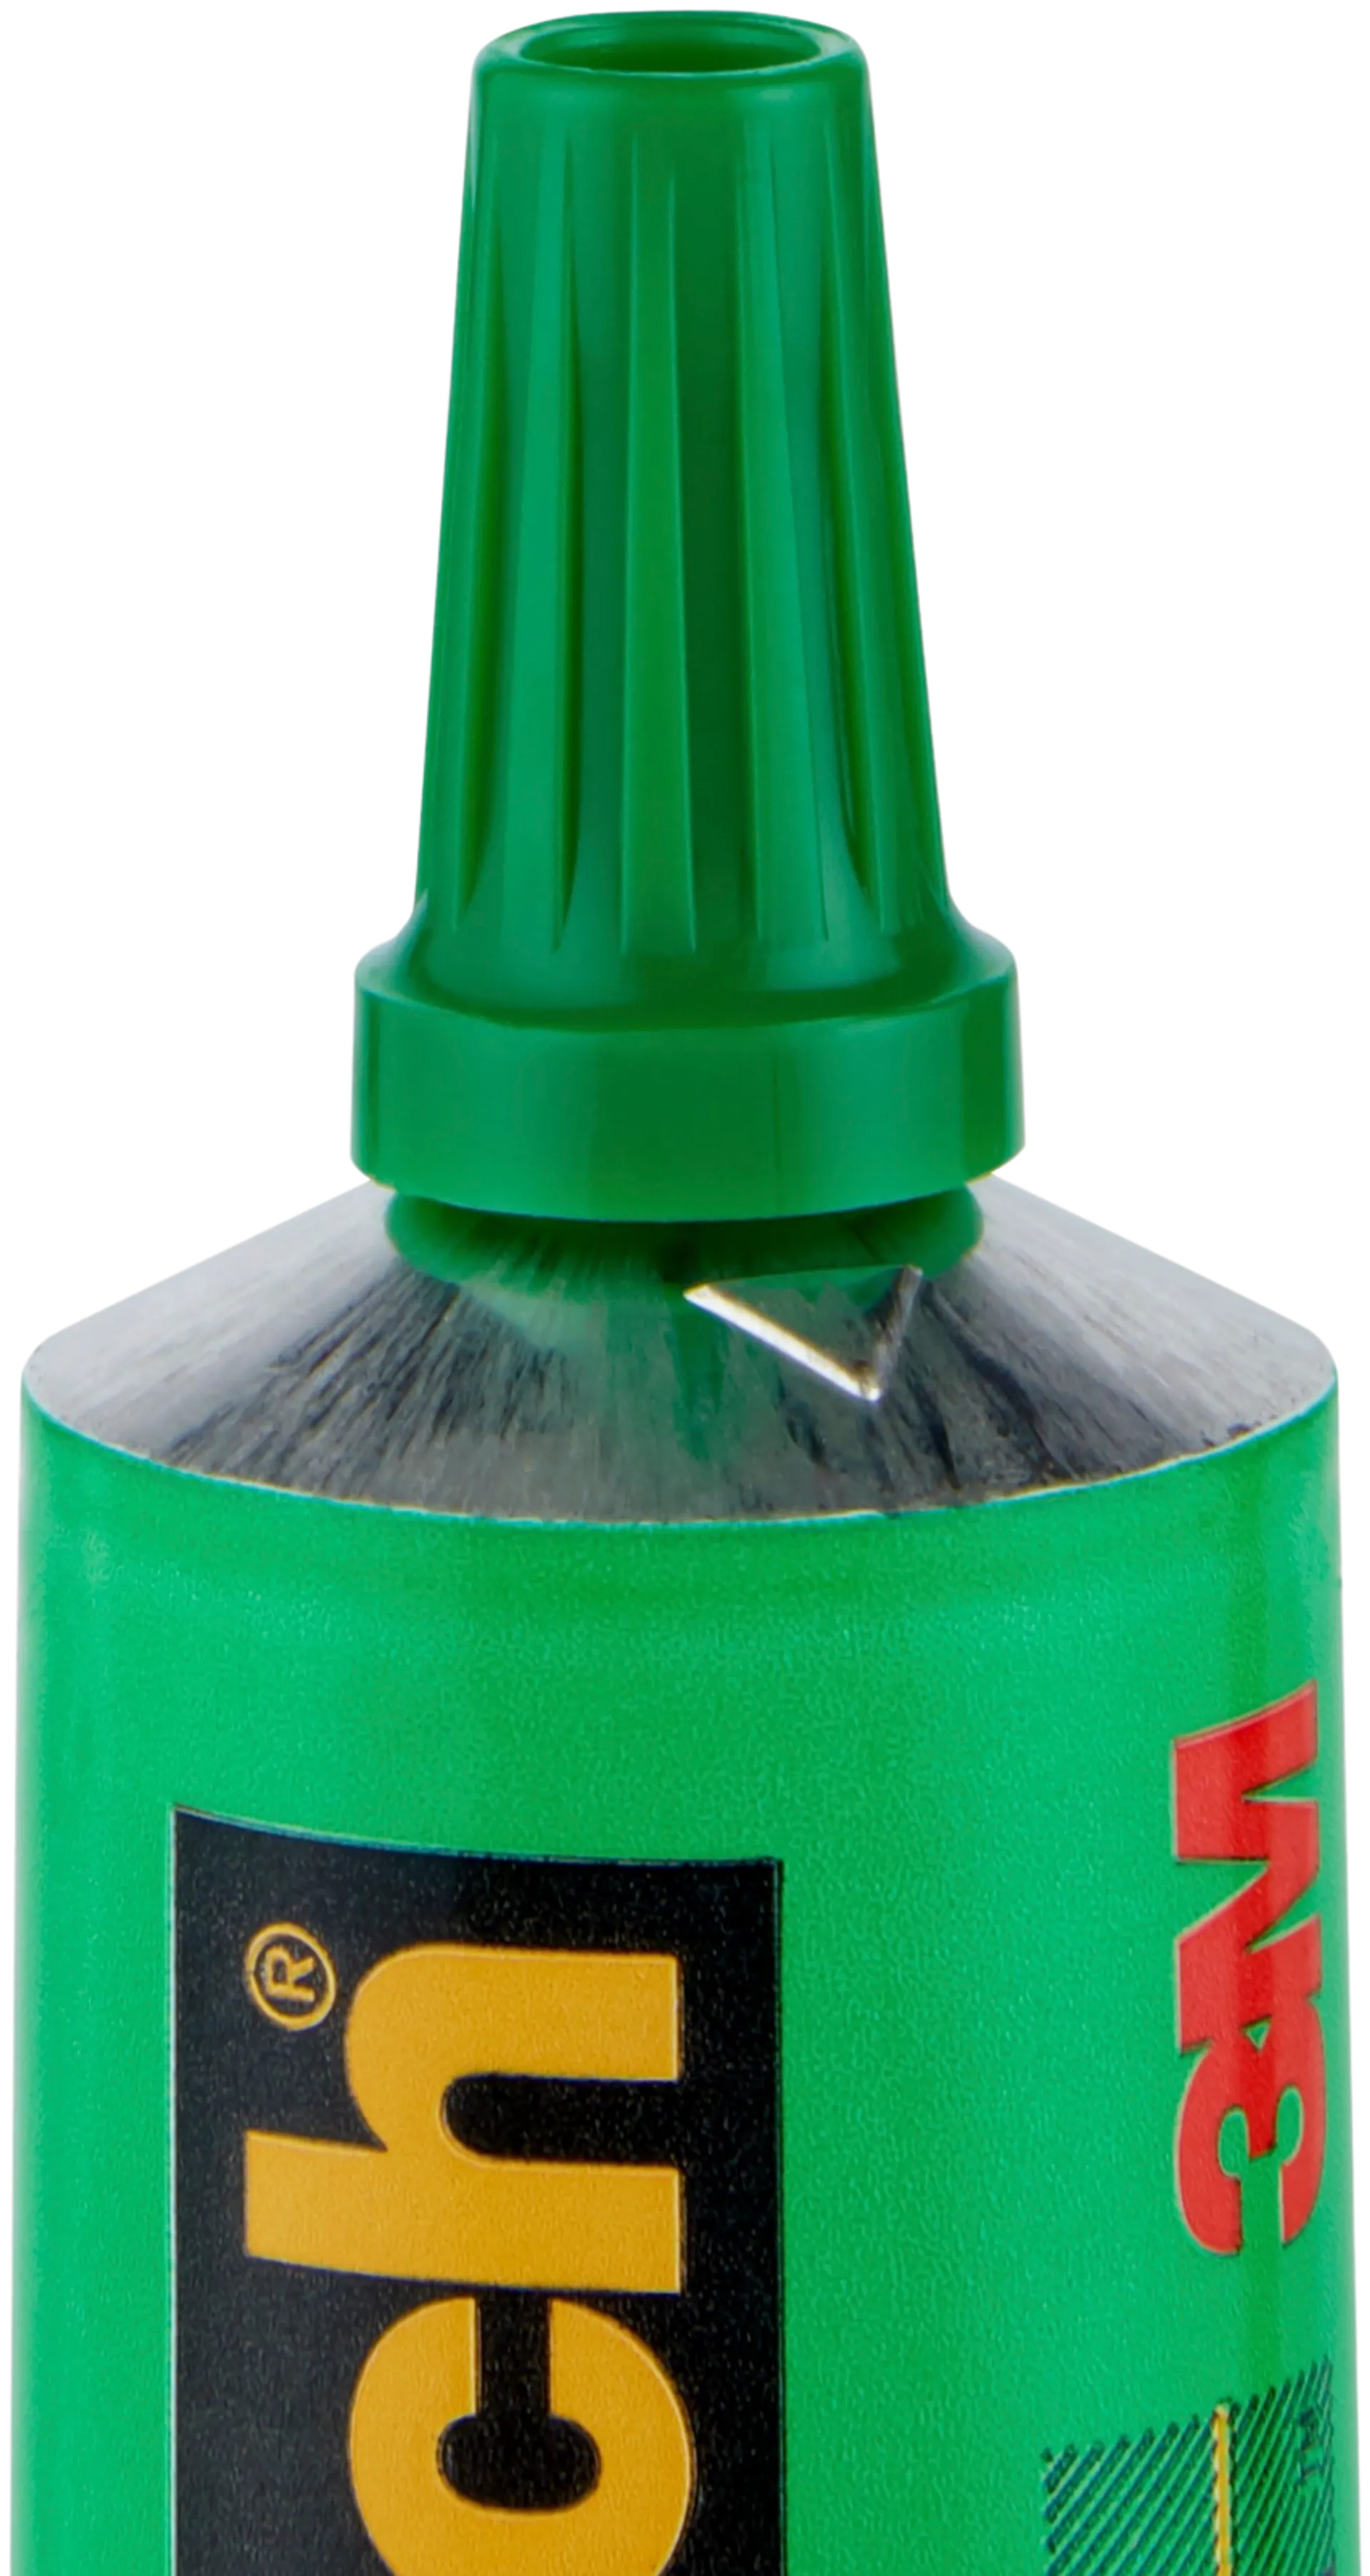 Scotch®-geeliliima, 30 ml, 1 tuubi/pakkaus - 2